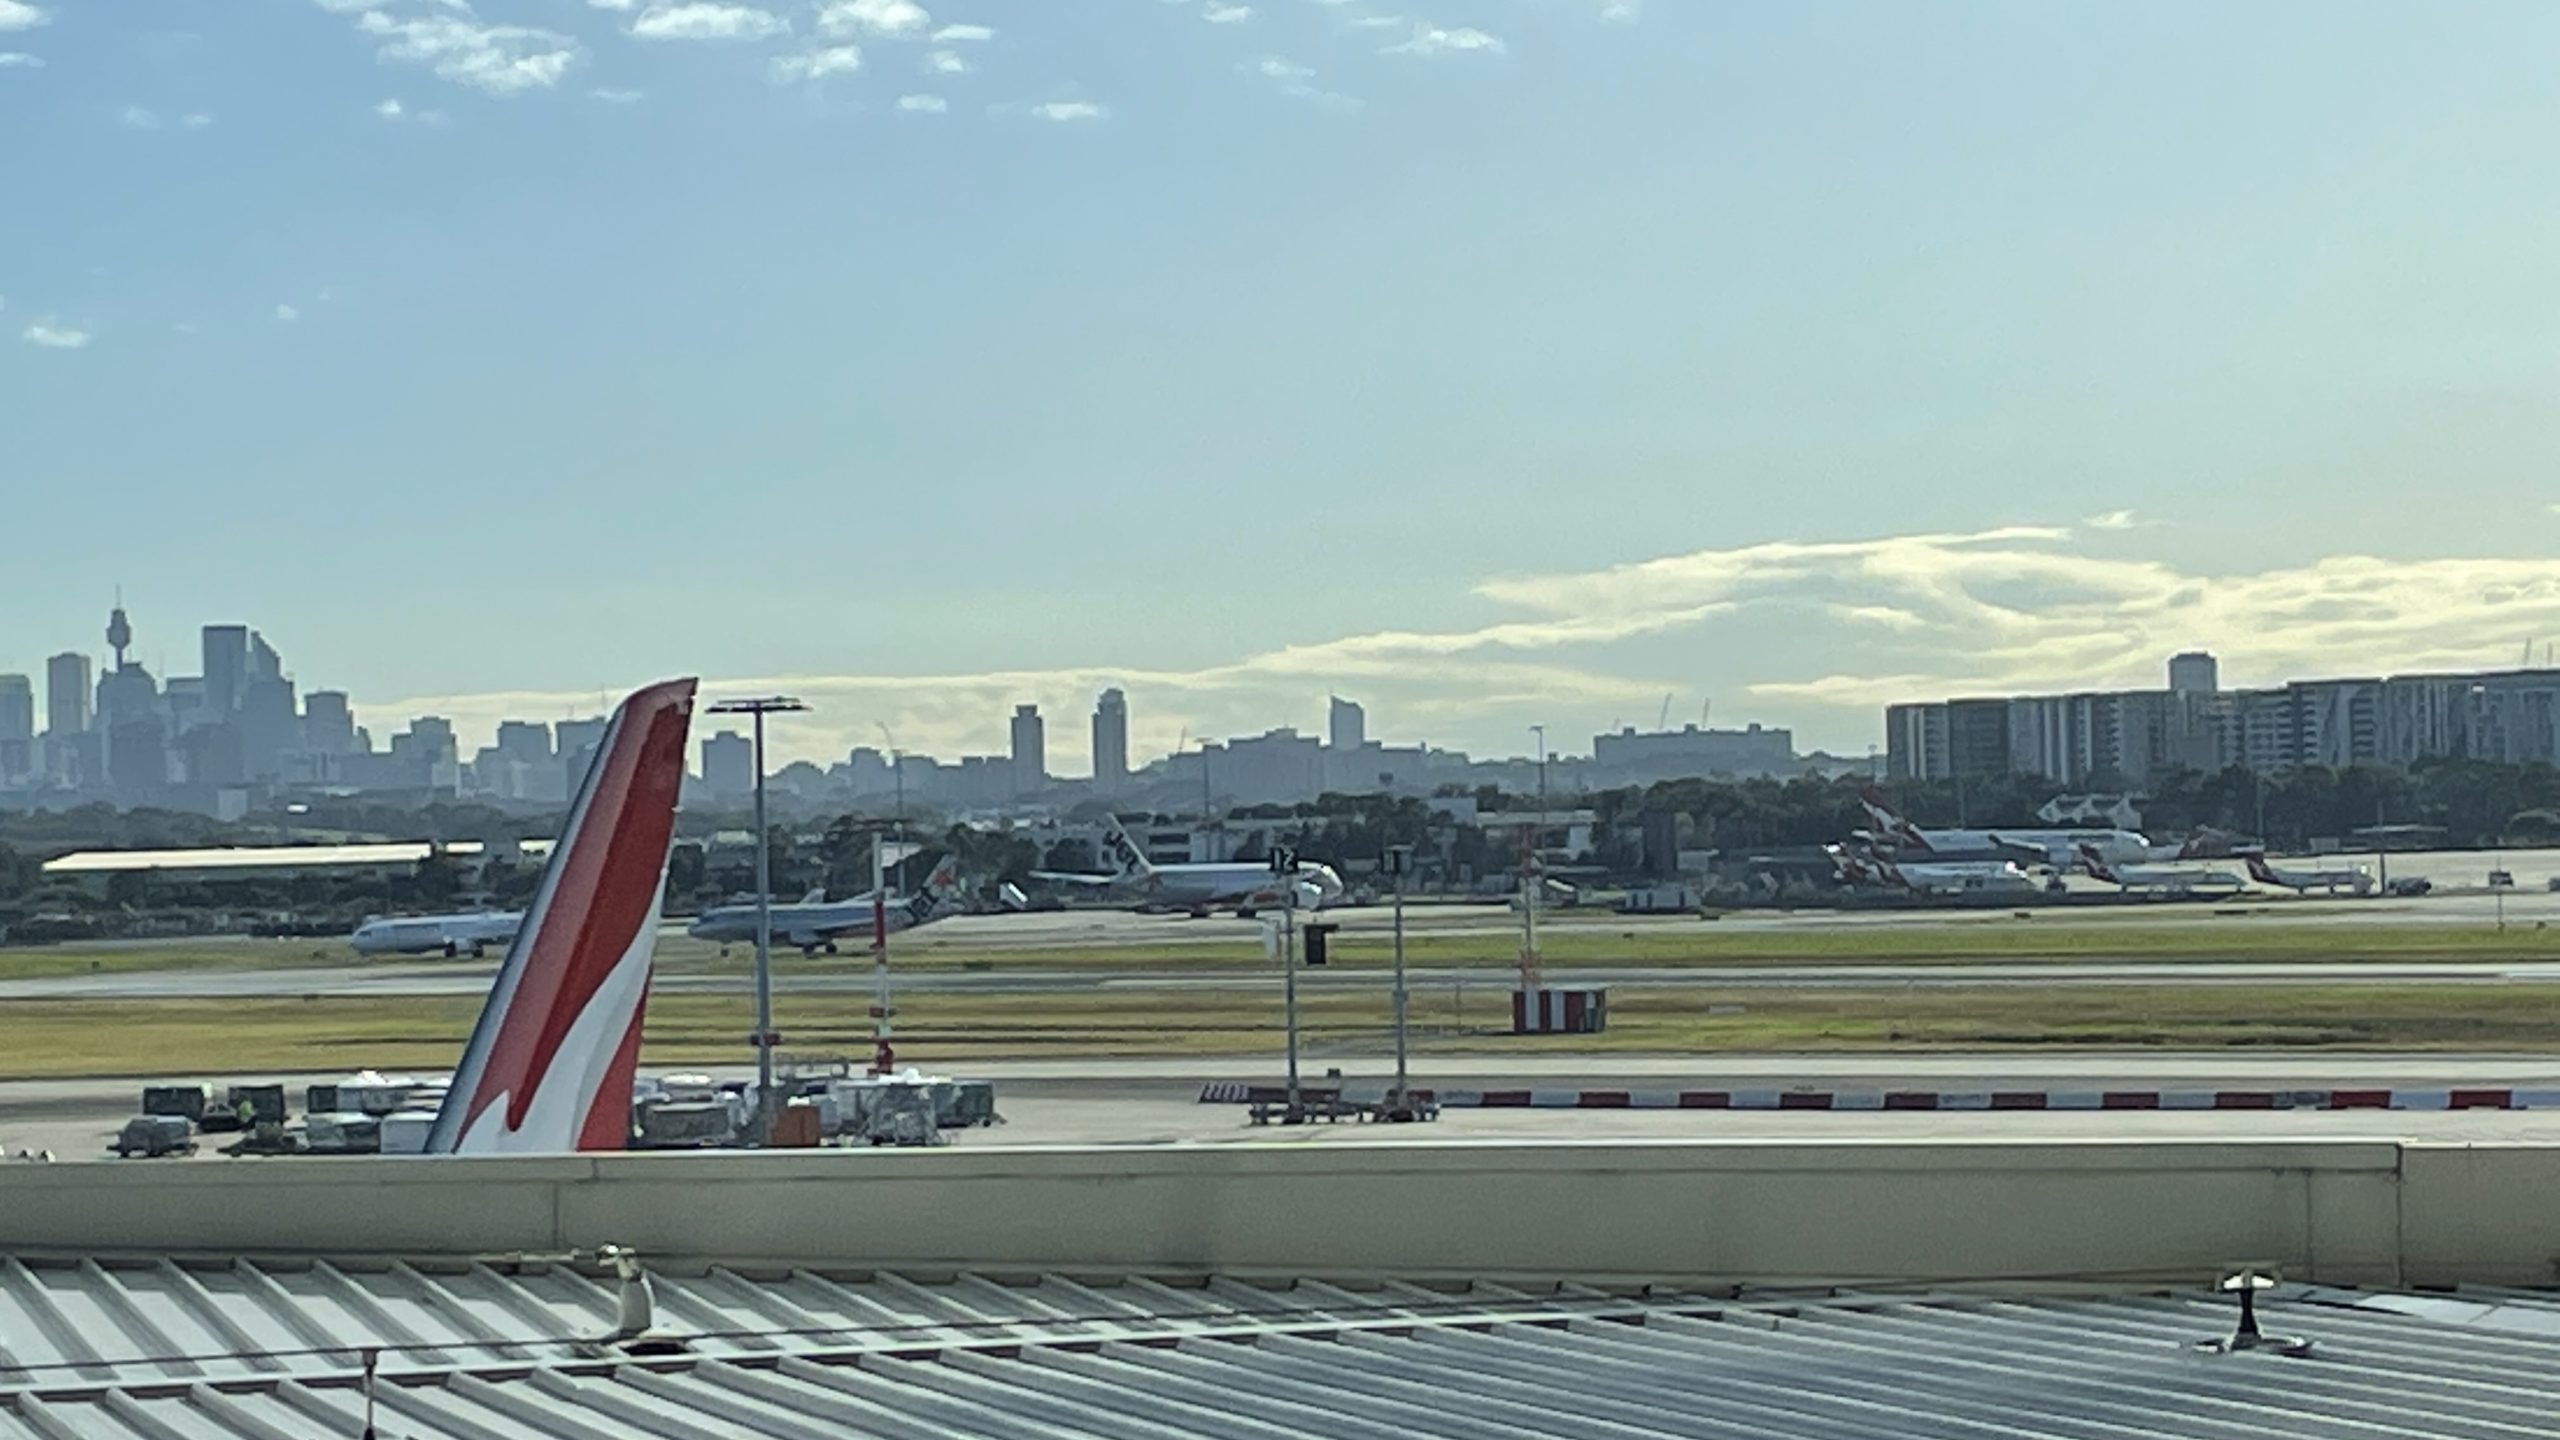 Qantas International Business Lounge View of City Point Hacks by Daniel Sciberras